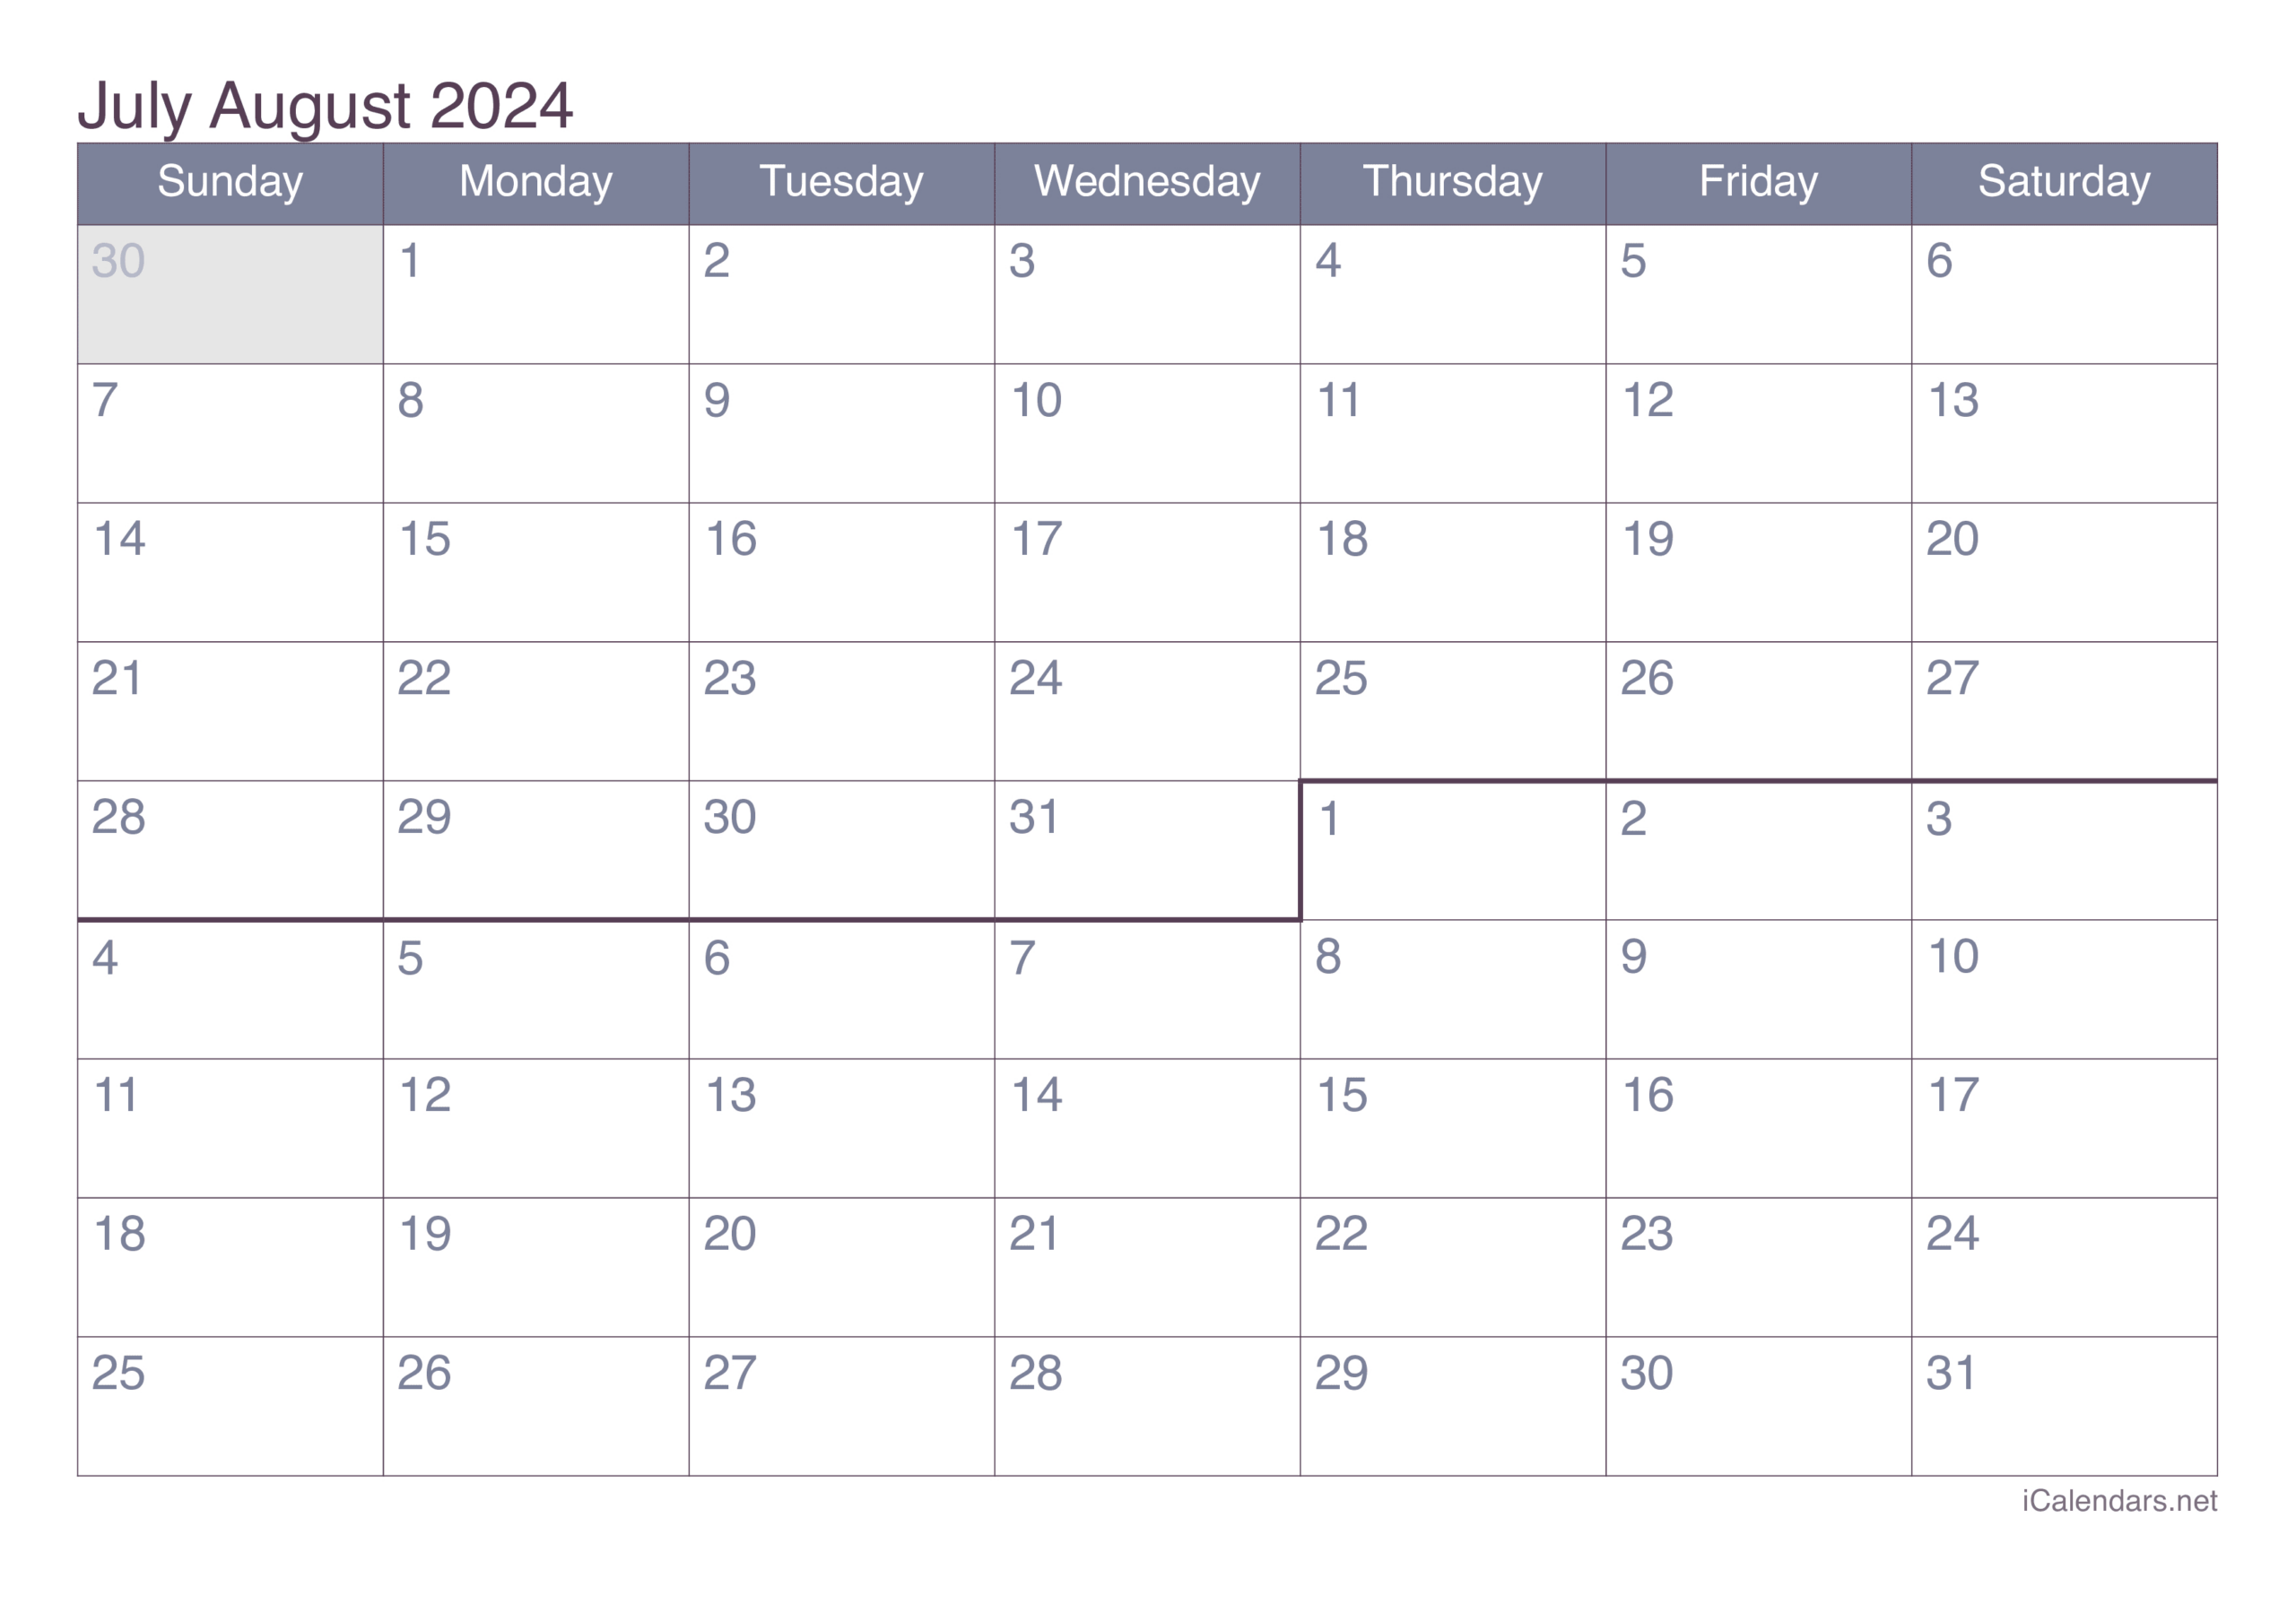 July And August 2024 Printable Calendar regarding Calendar For the Month of July and August 2024